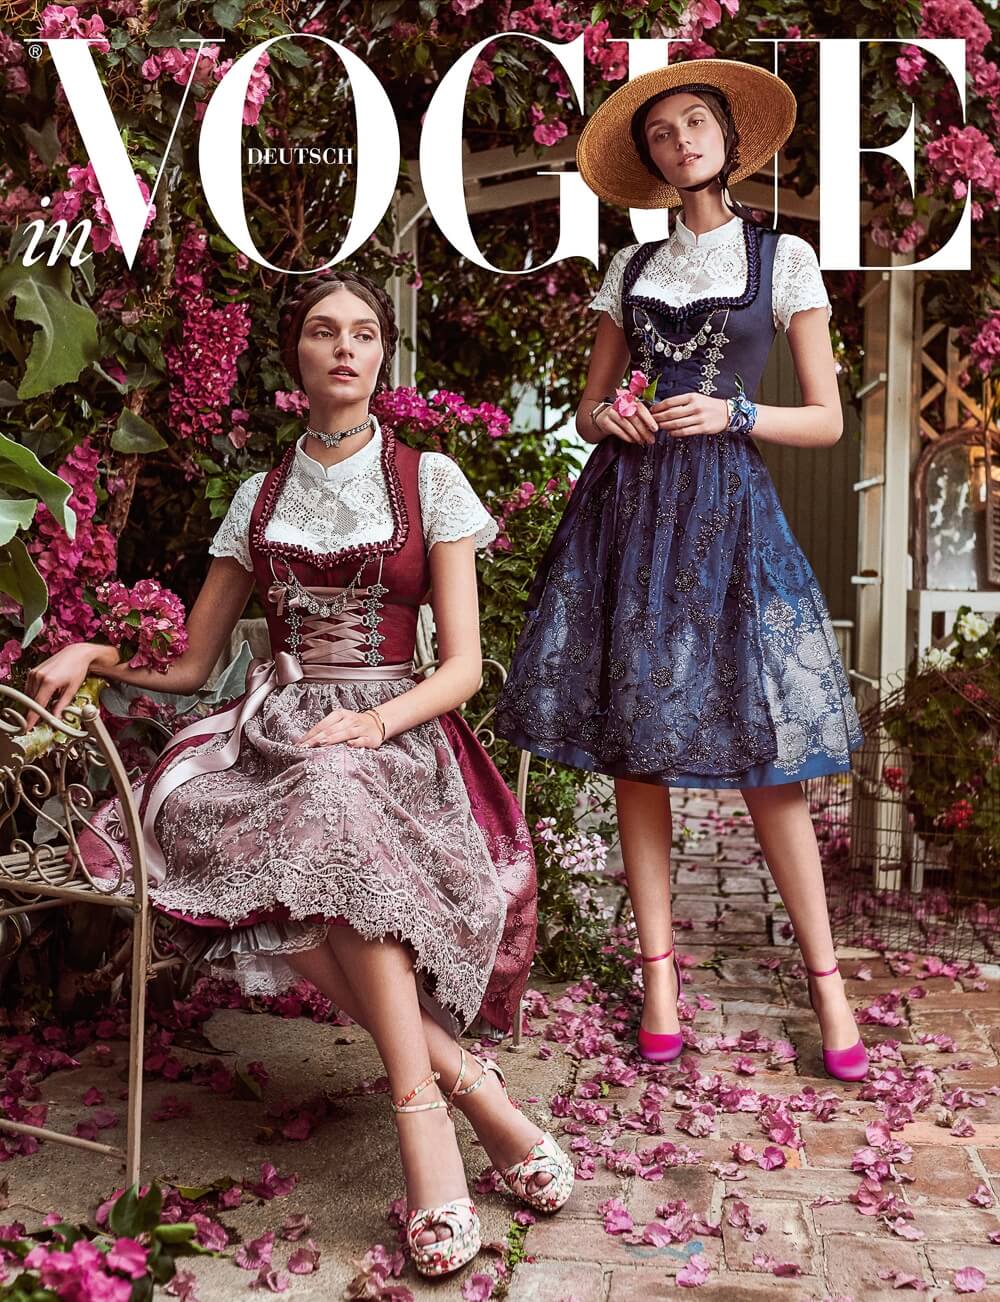 Vogue-Germany-August-2018-Deimante-Misiunaite-Andreas-Ortner-6